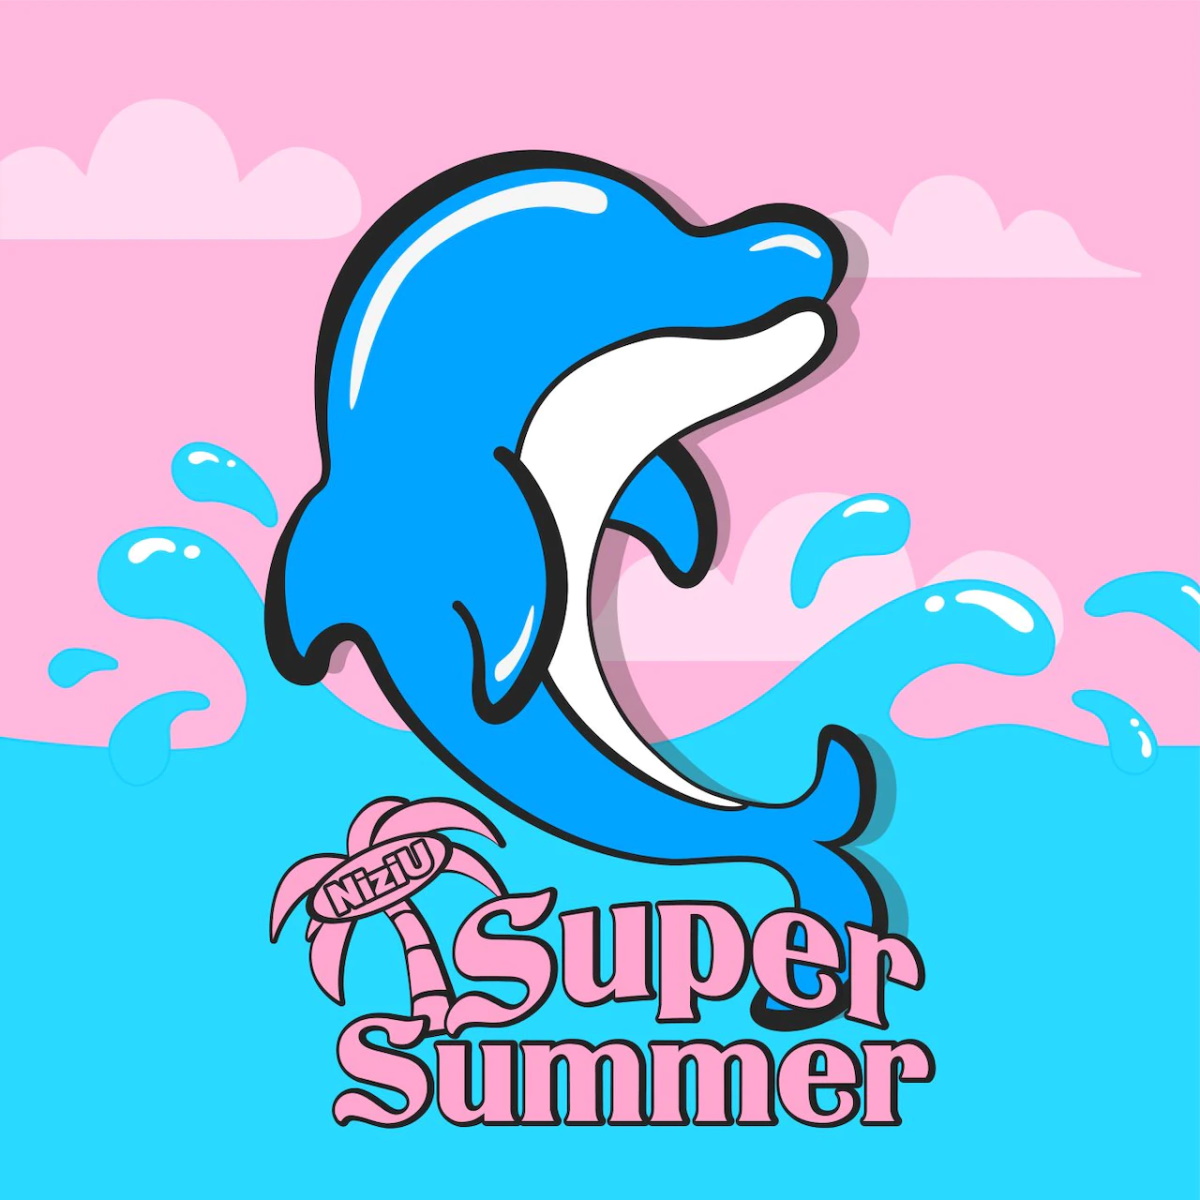 『NiziU - Super Summer』収録の『Super Summer』ジャケット